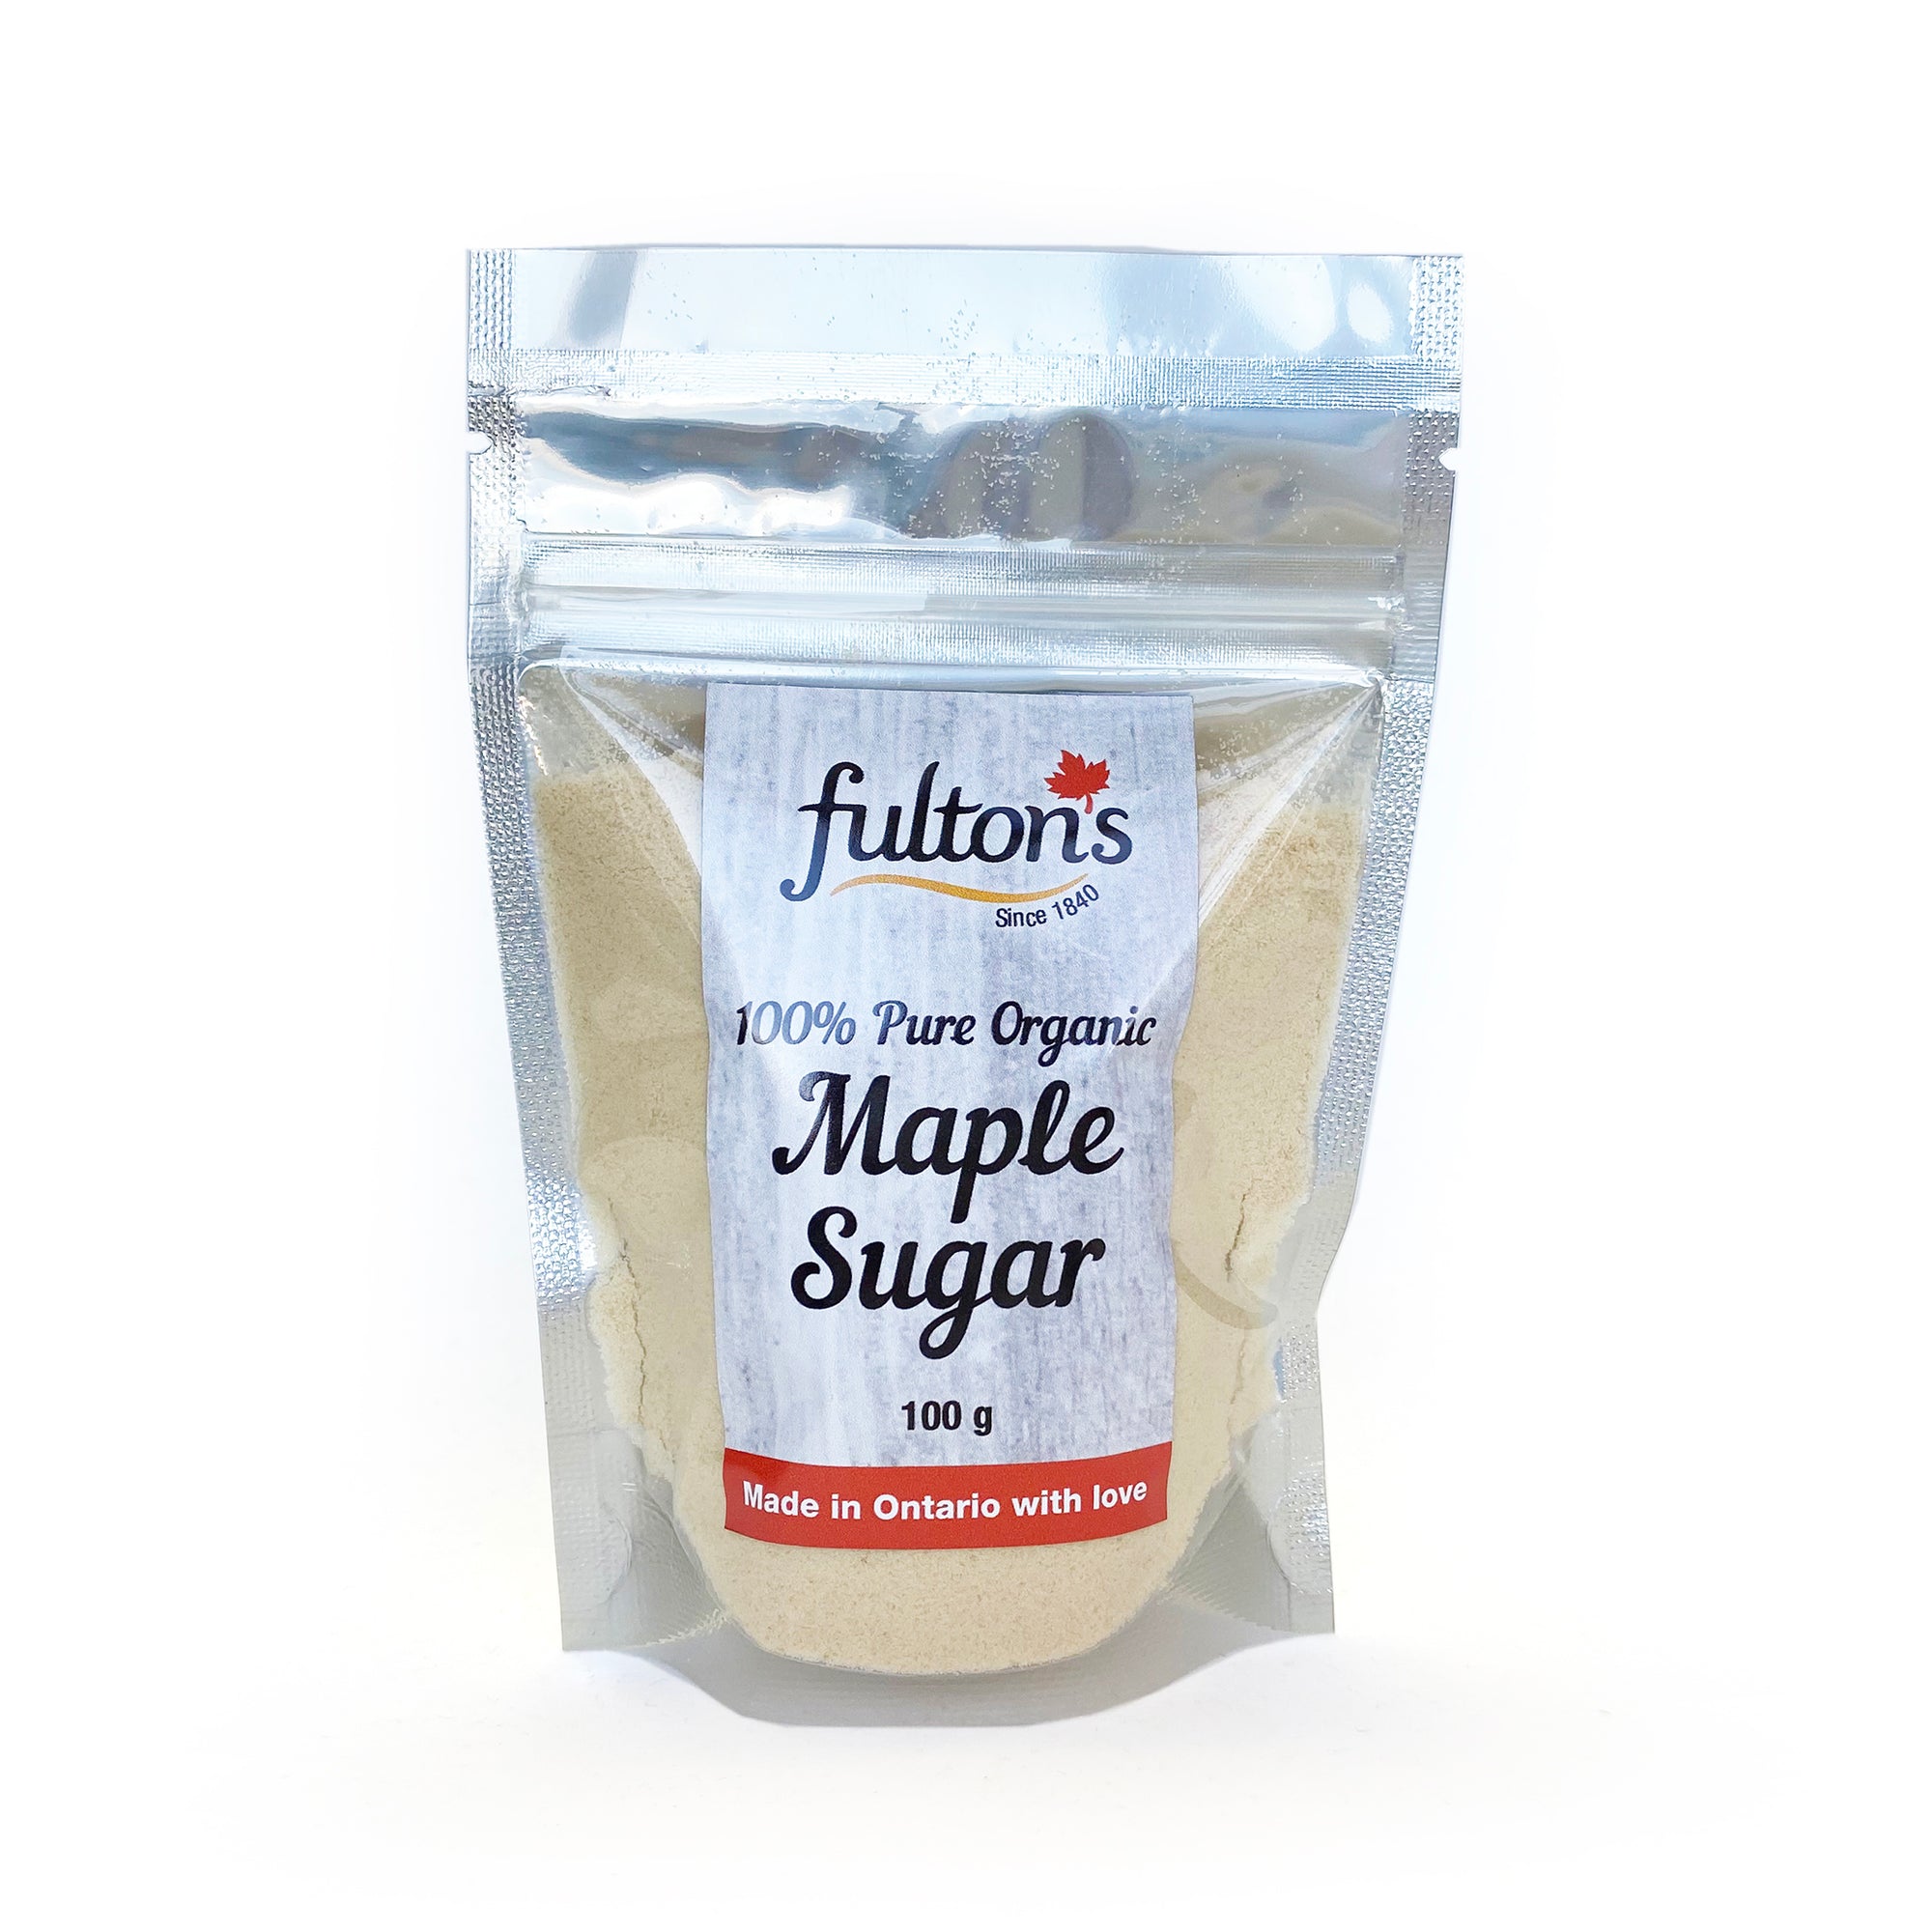 Bag of Fulton's 100% pure organic maple sugar.